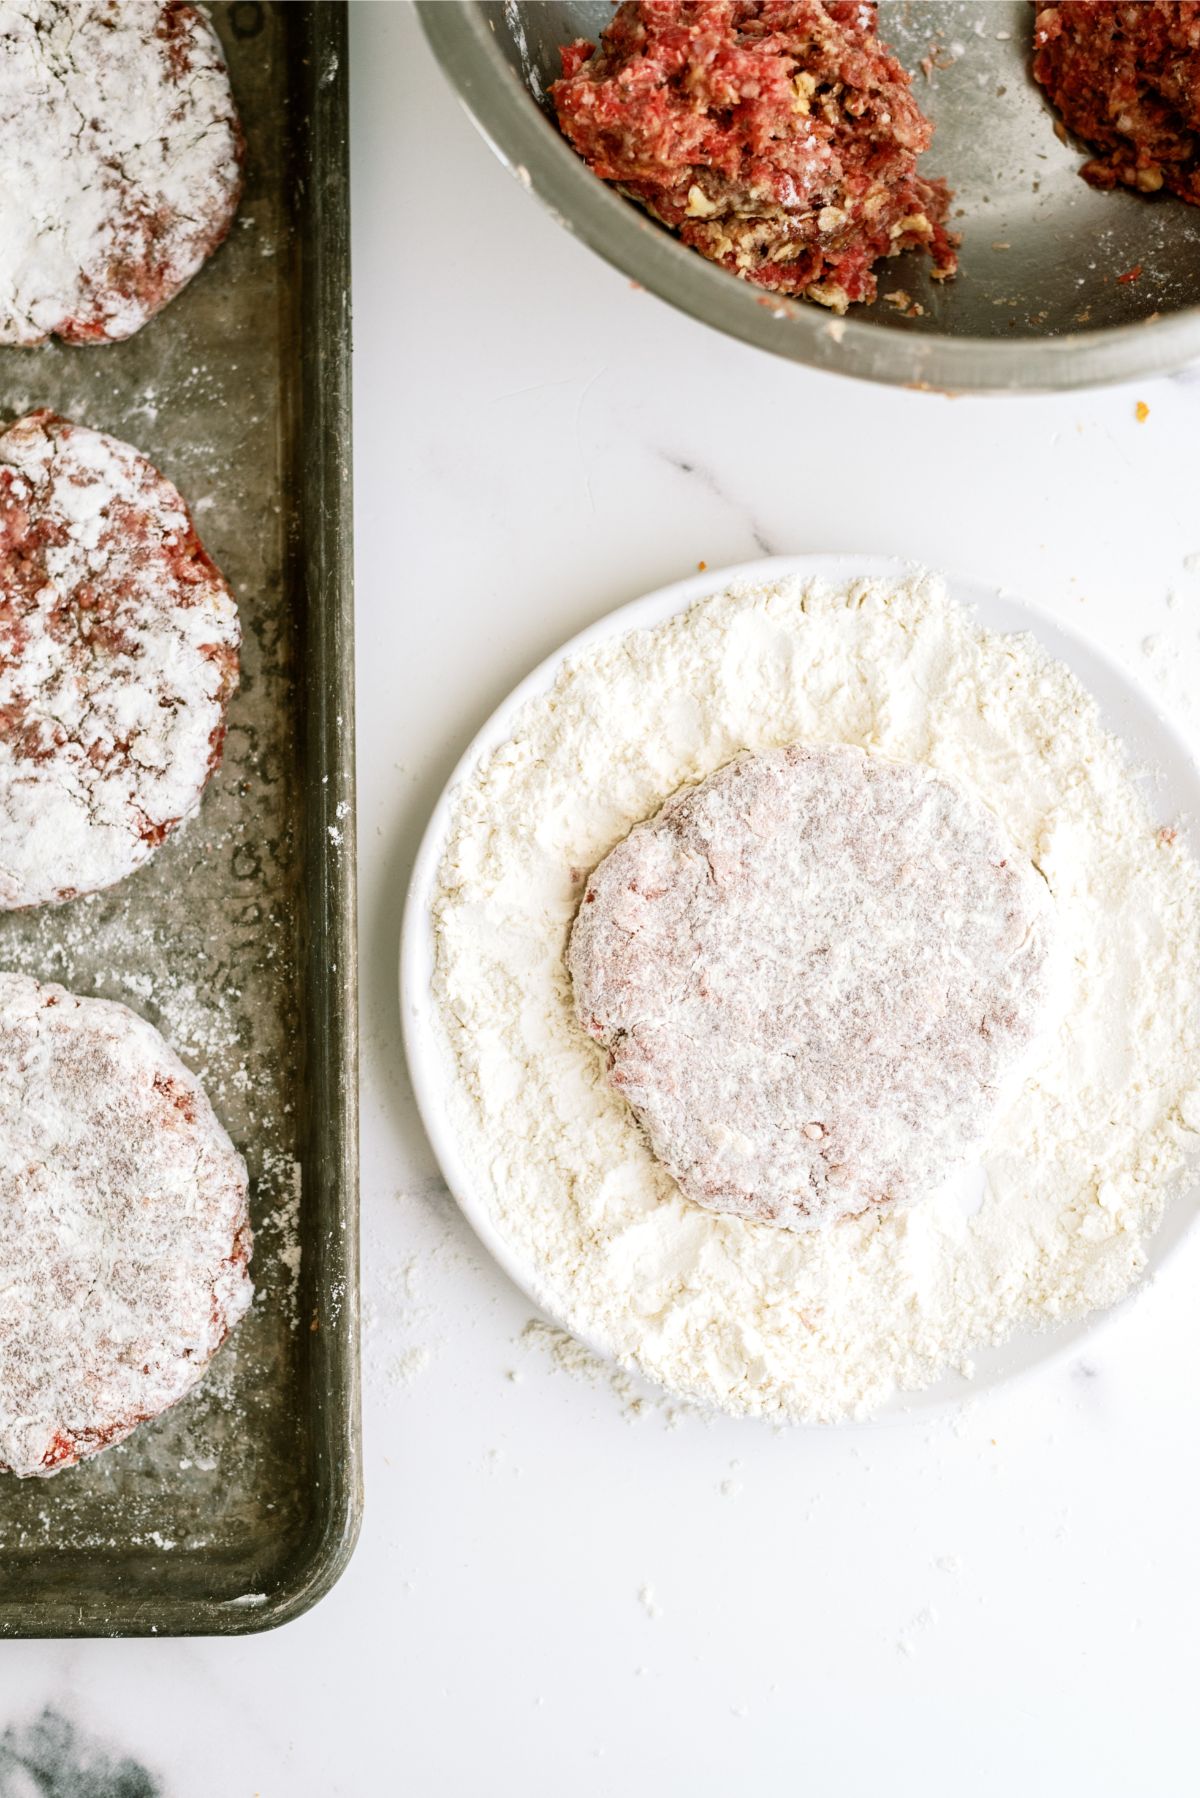 Dredging hamburger patties in flour